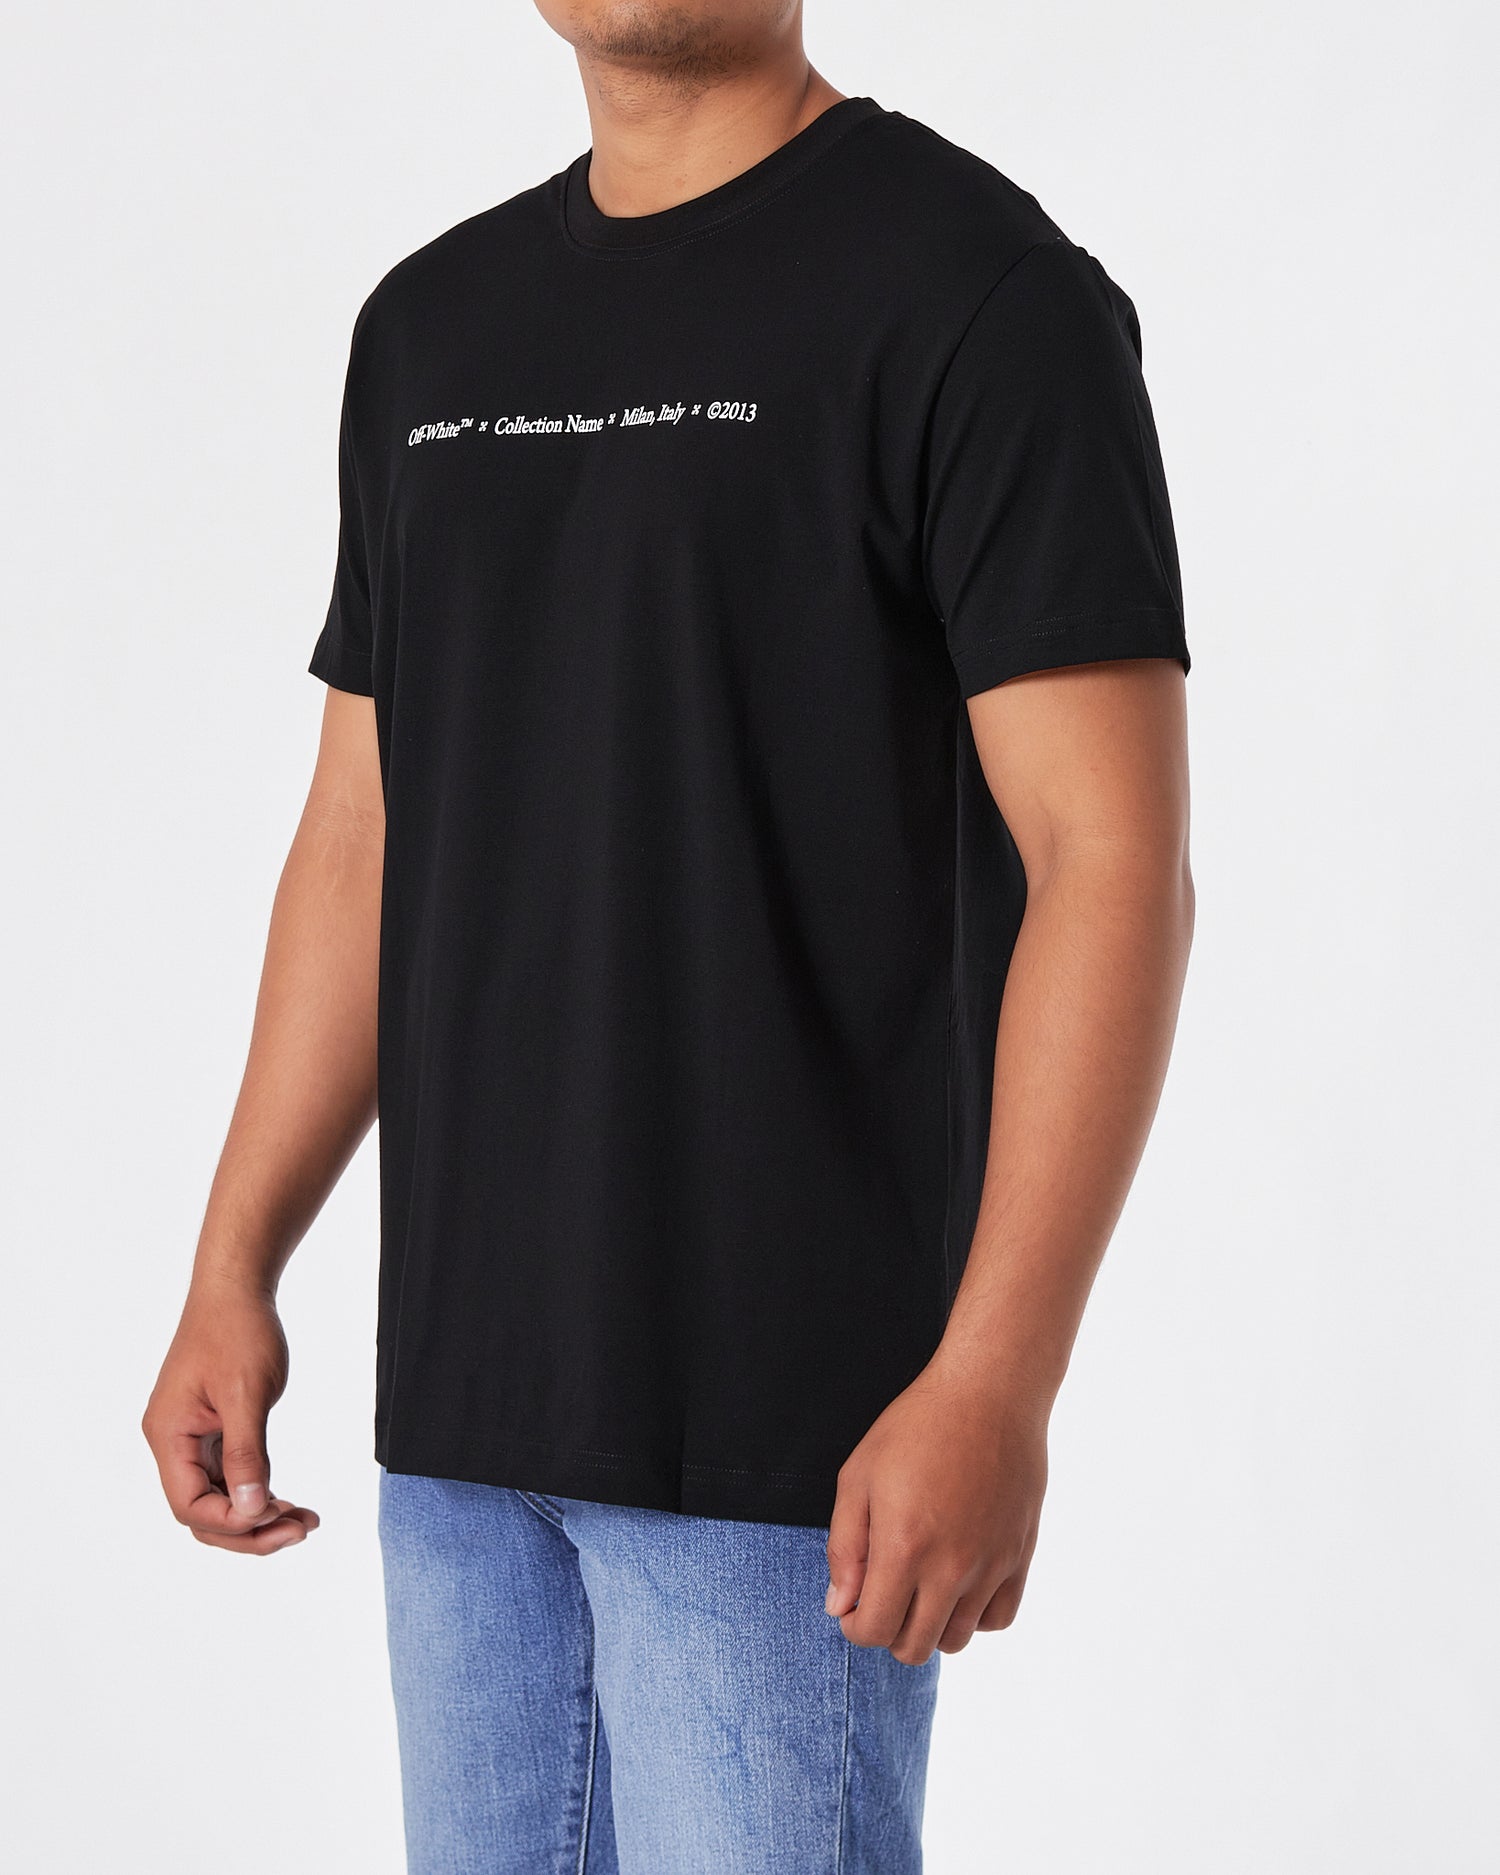 OW Cross Back Logo Graffiti Men Black T-Shirt 17.50